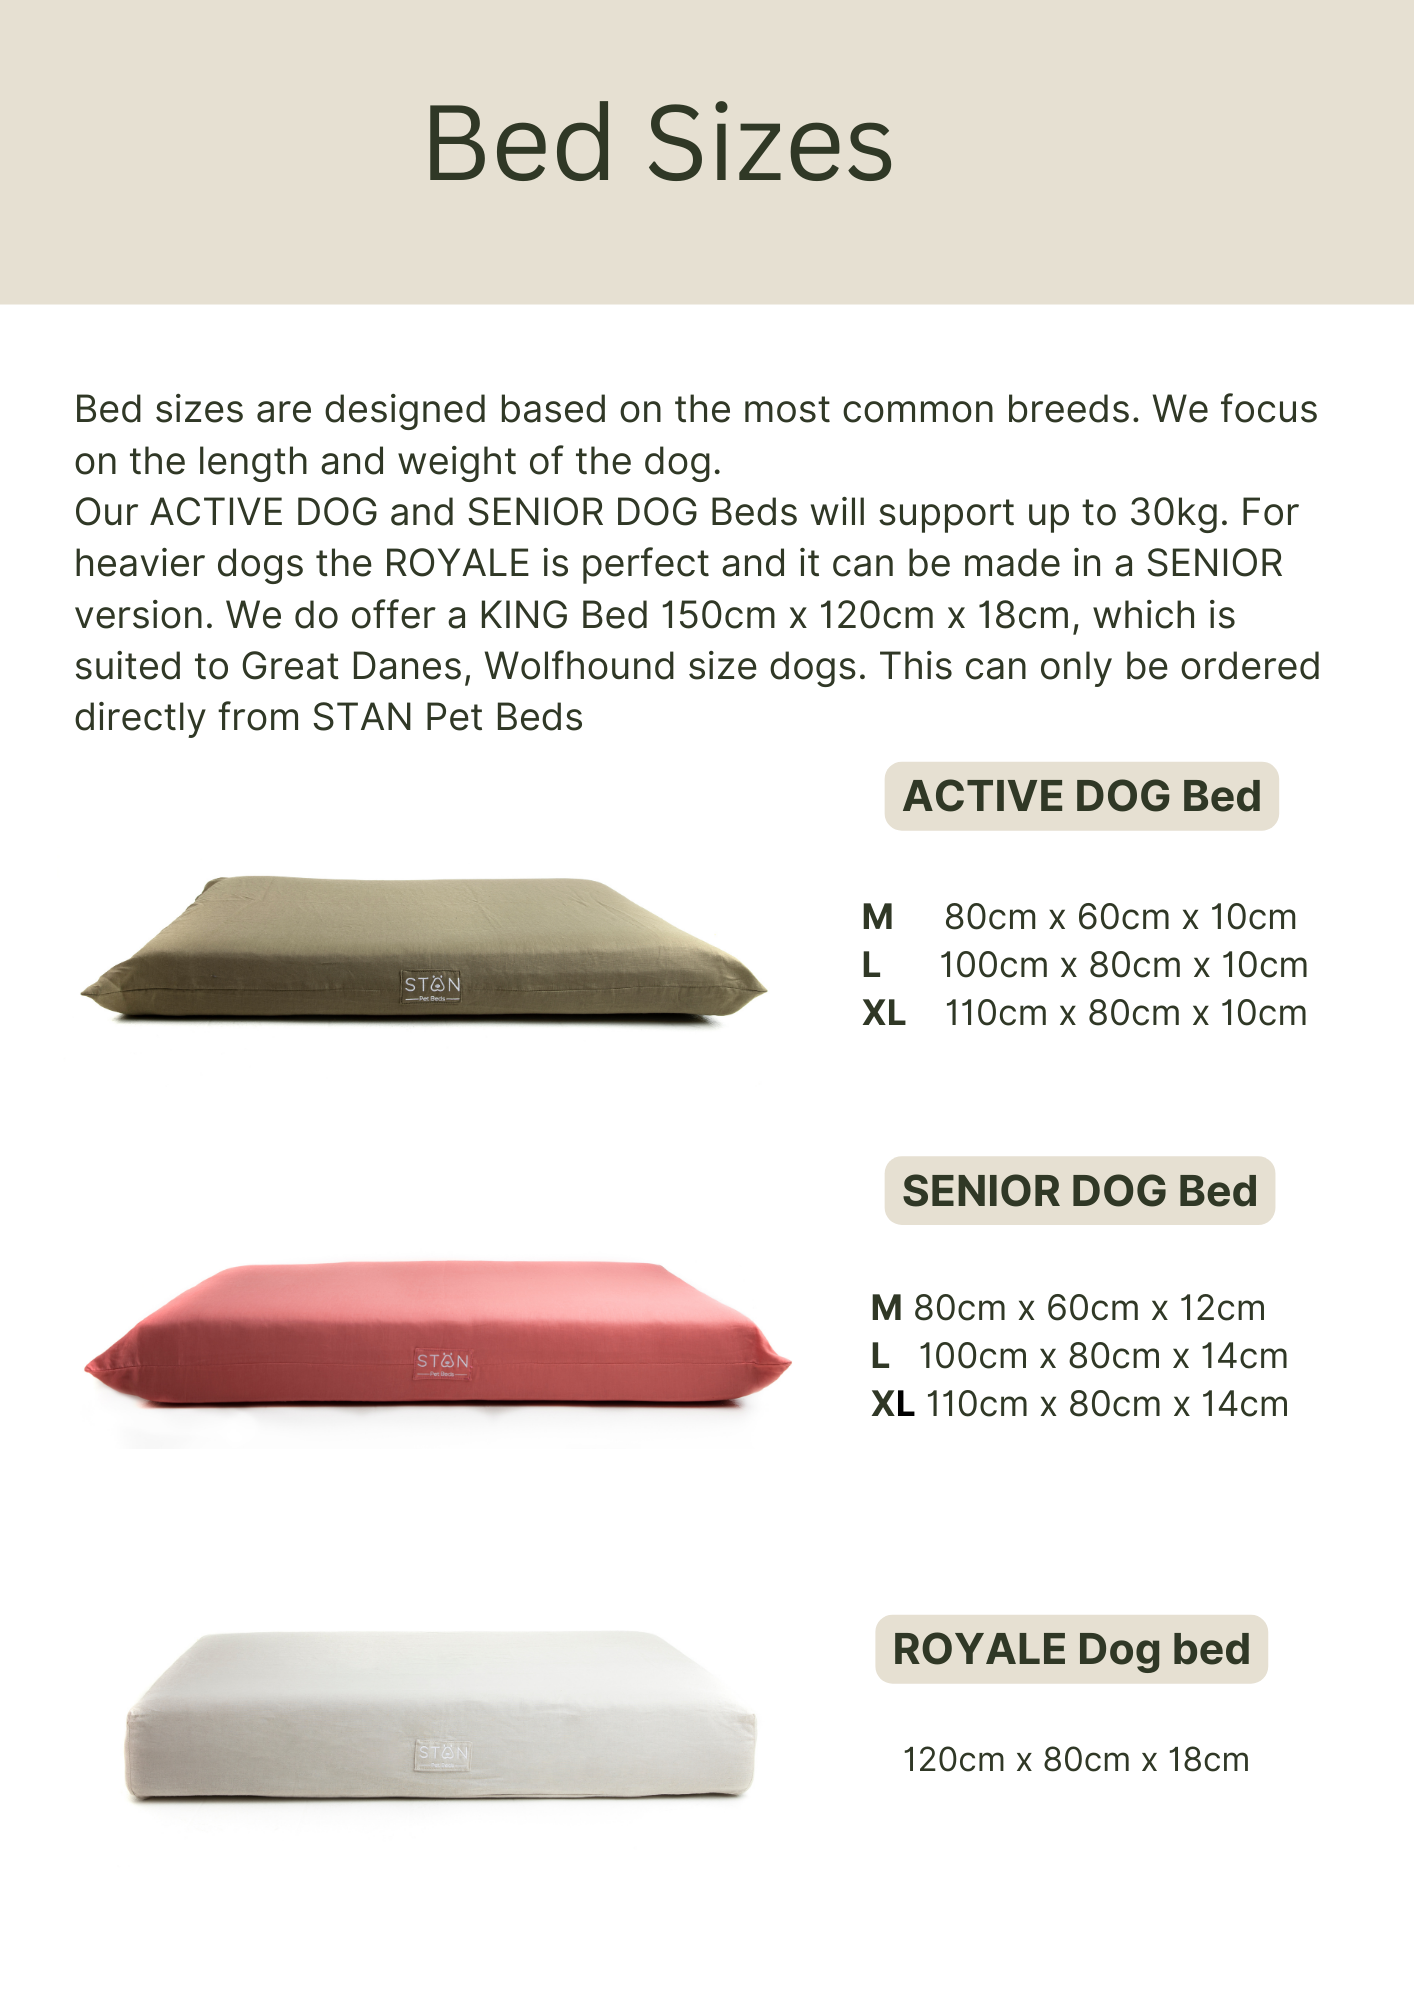 STAN Senior Dog Bed in Linen / Grey Marle